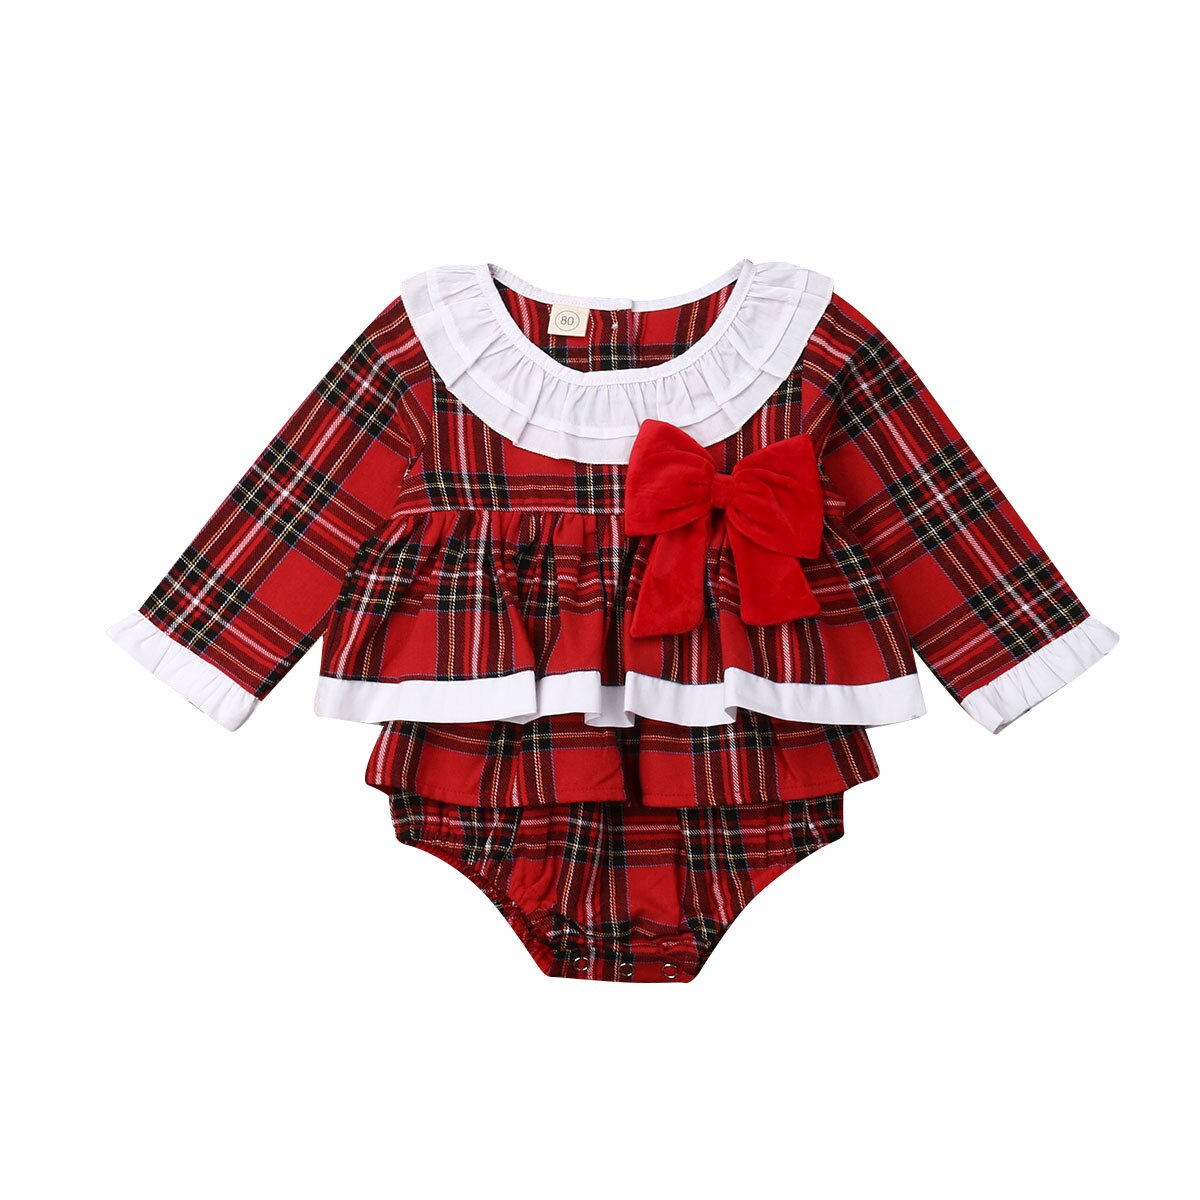 Toddler baby pige jul romper kjole bodysuit plaid outfit tøj: 6 to 12m